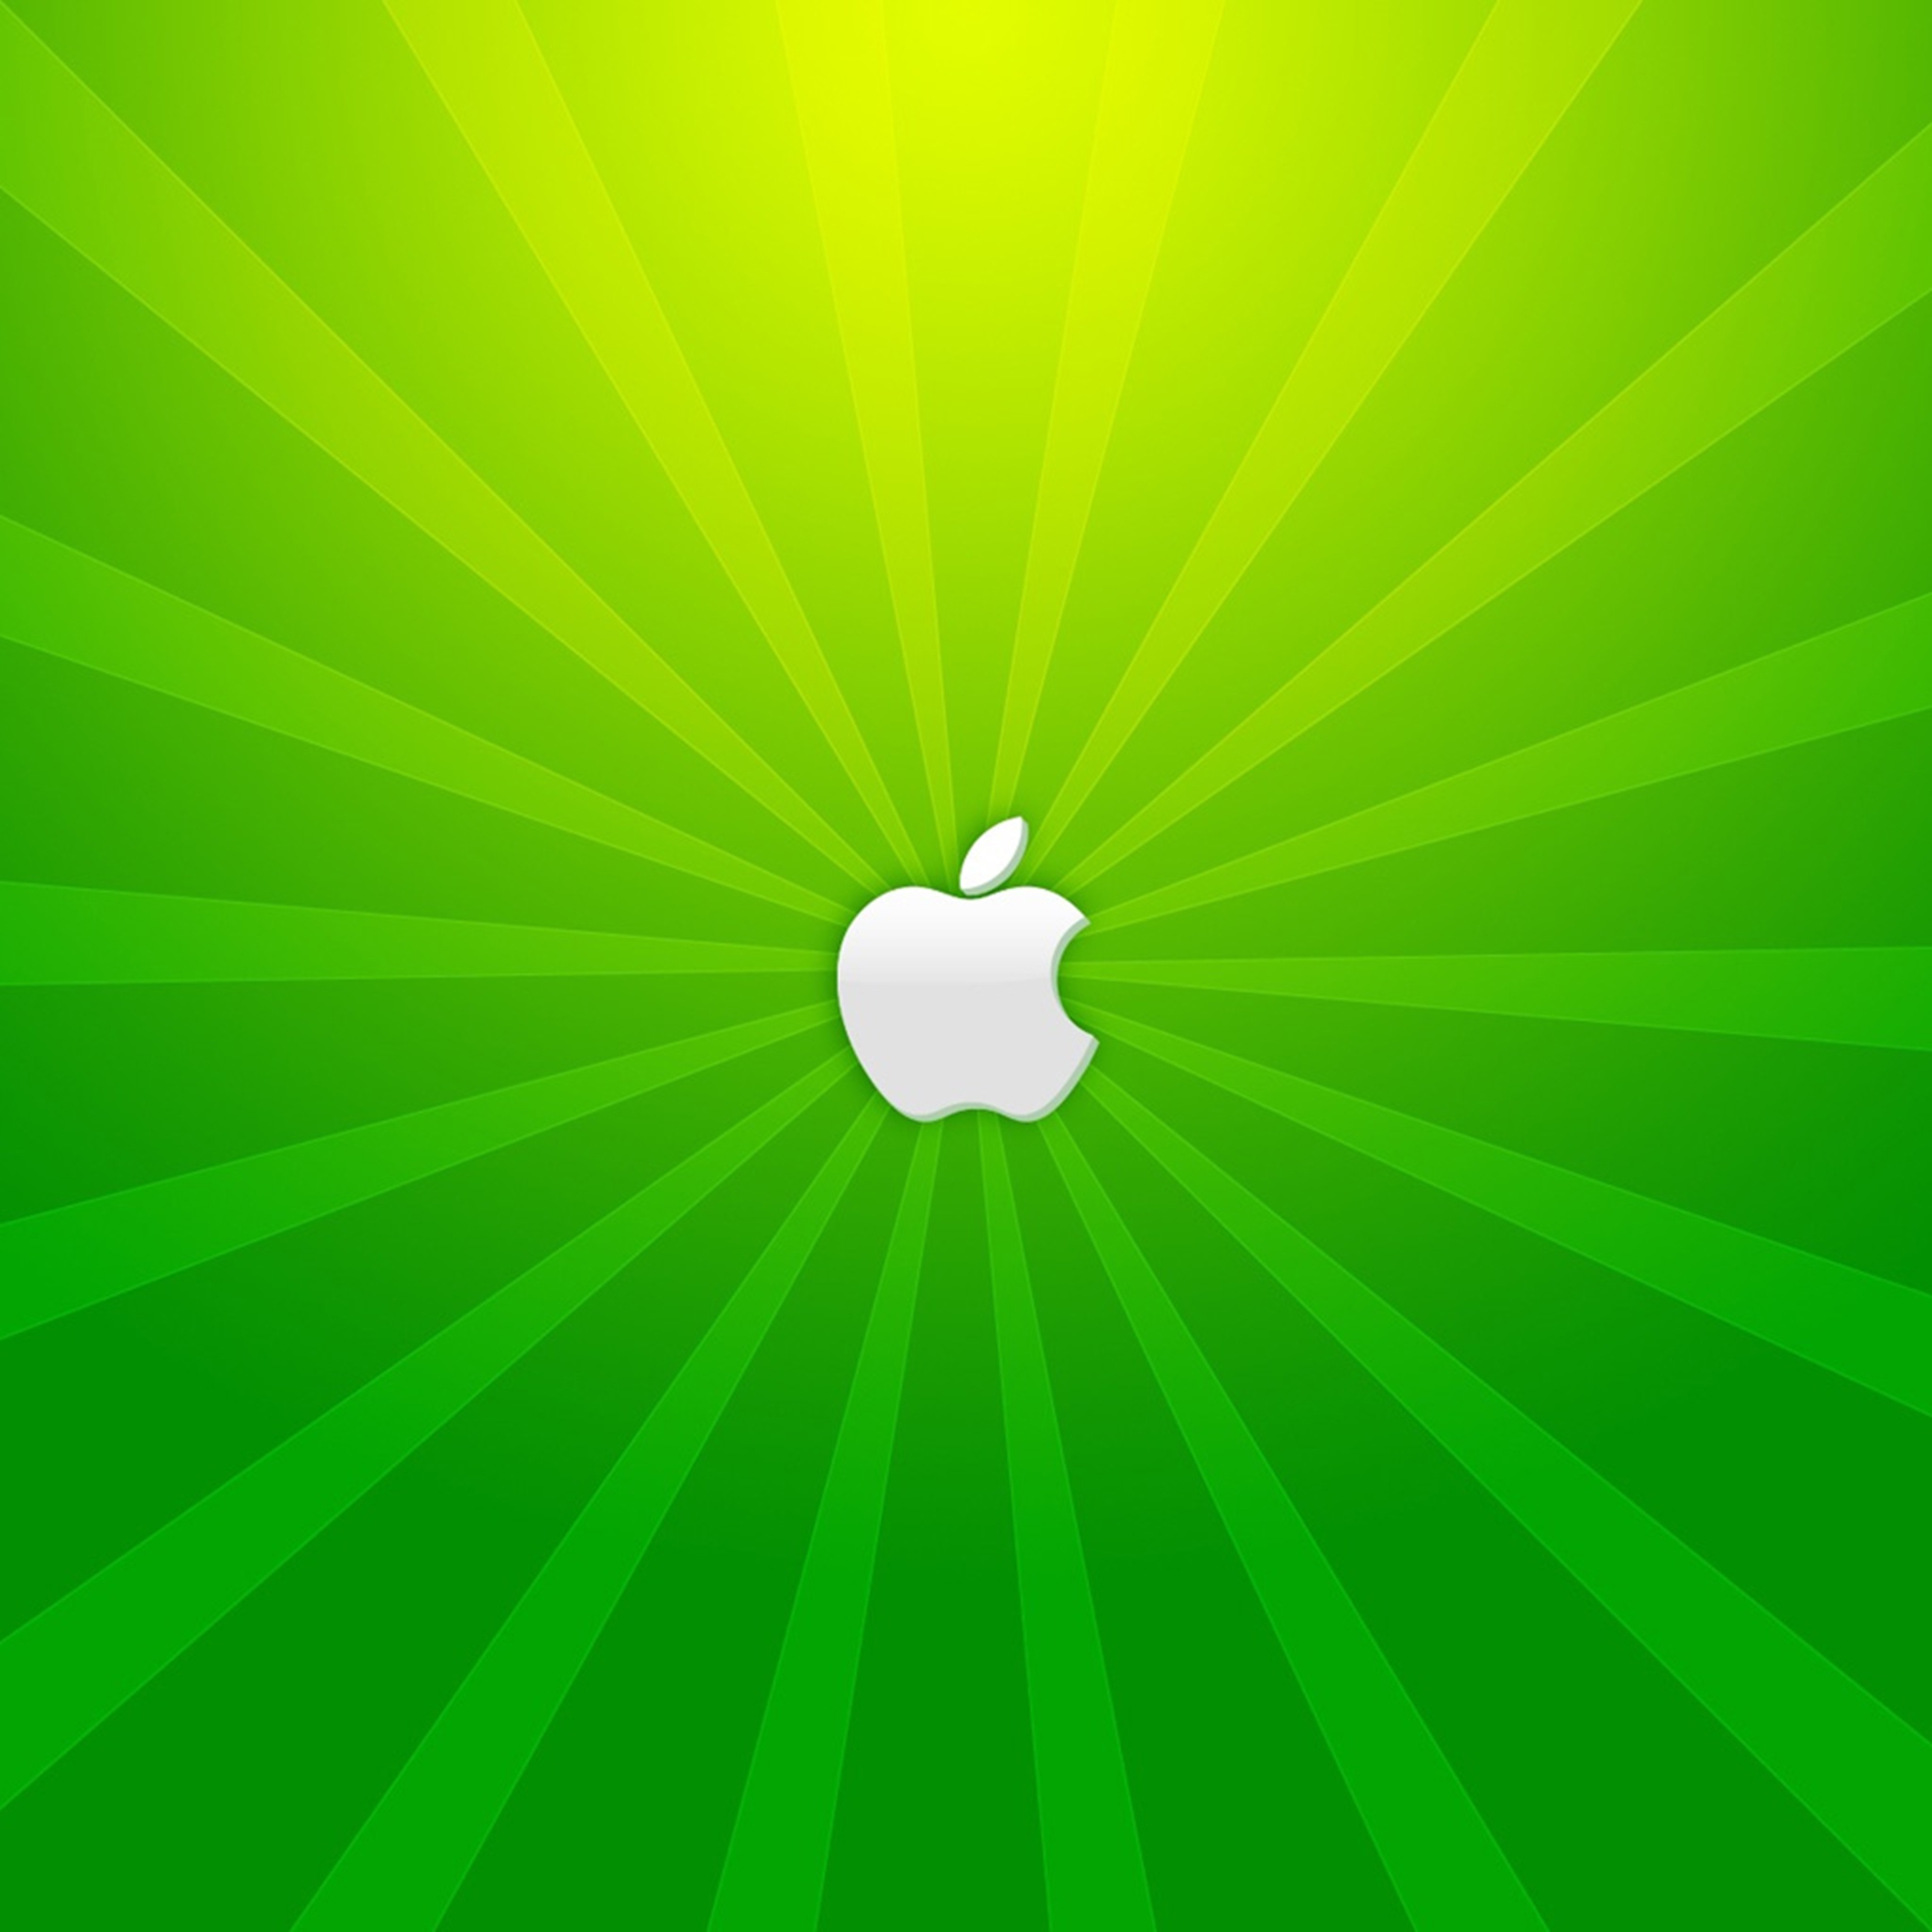 iPad Wallpapers Apple Green Shine Ipad Wallpaper 3208x3208 px